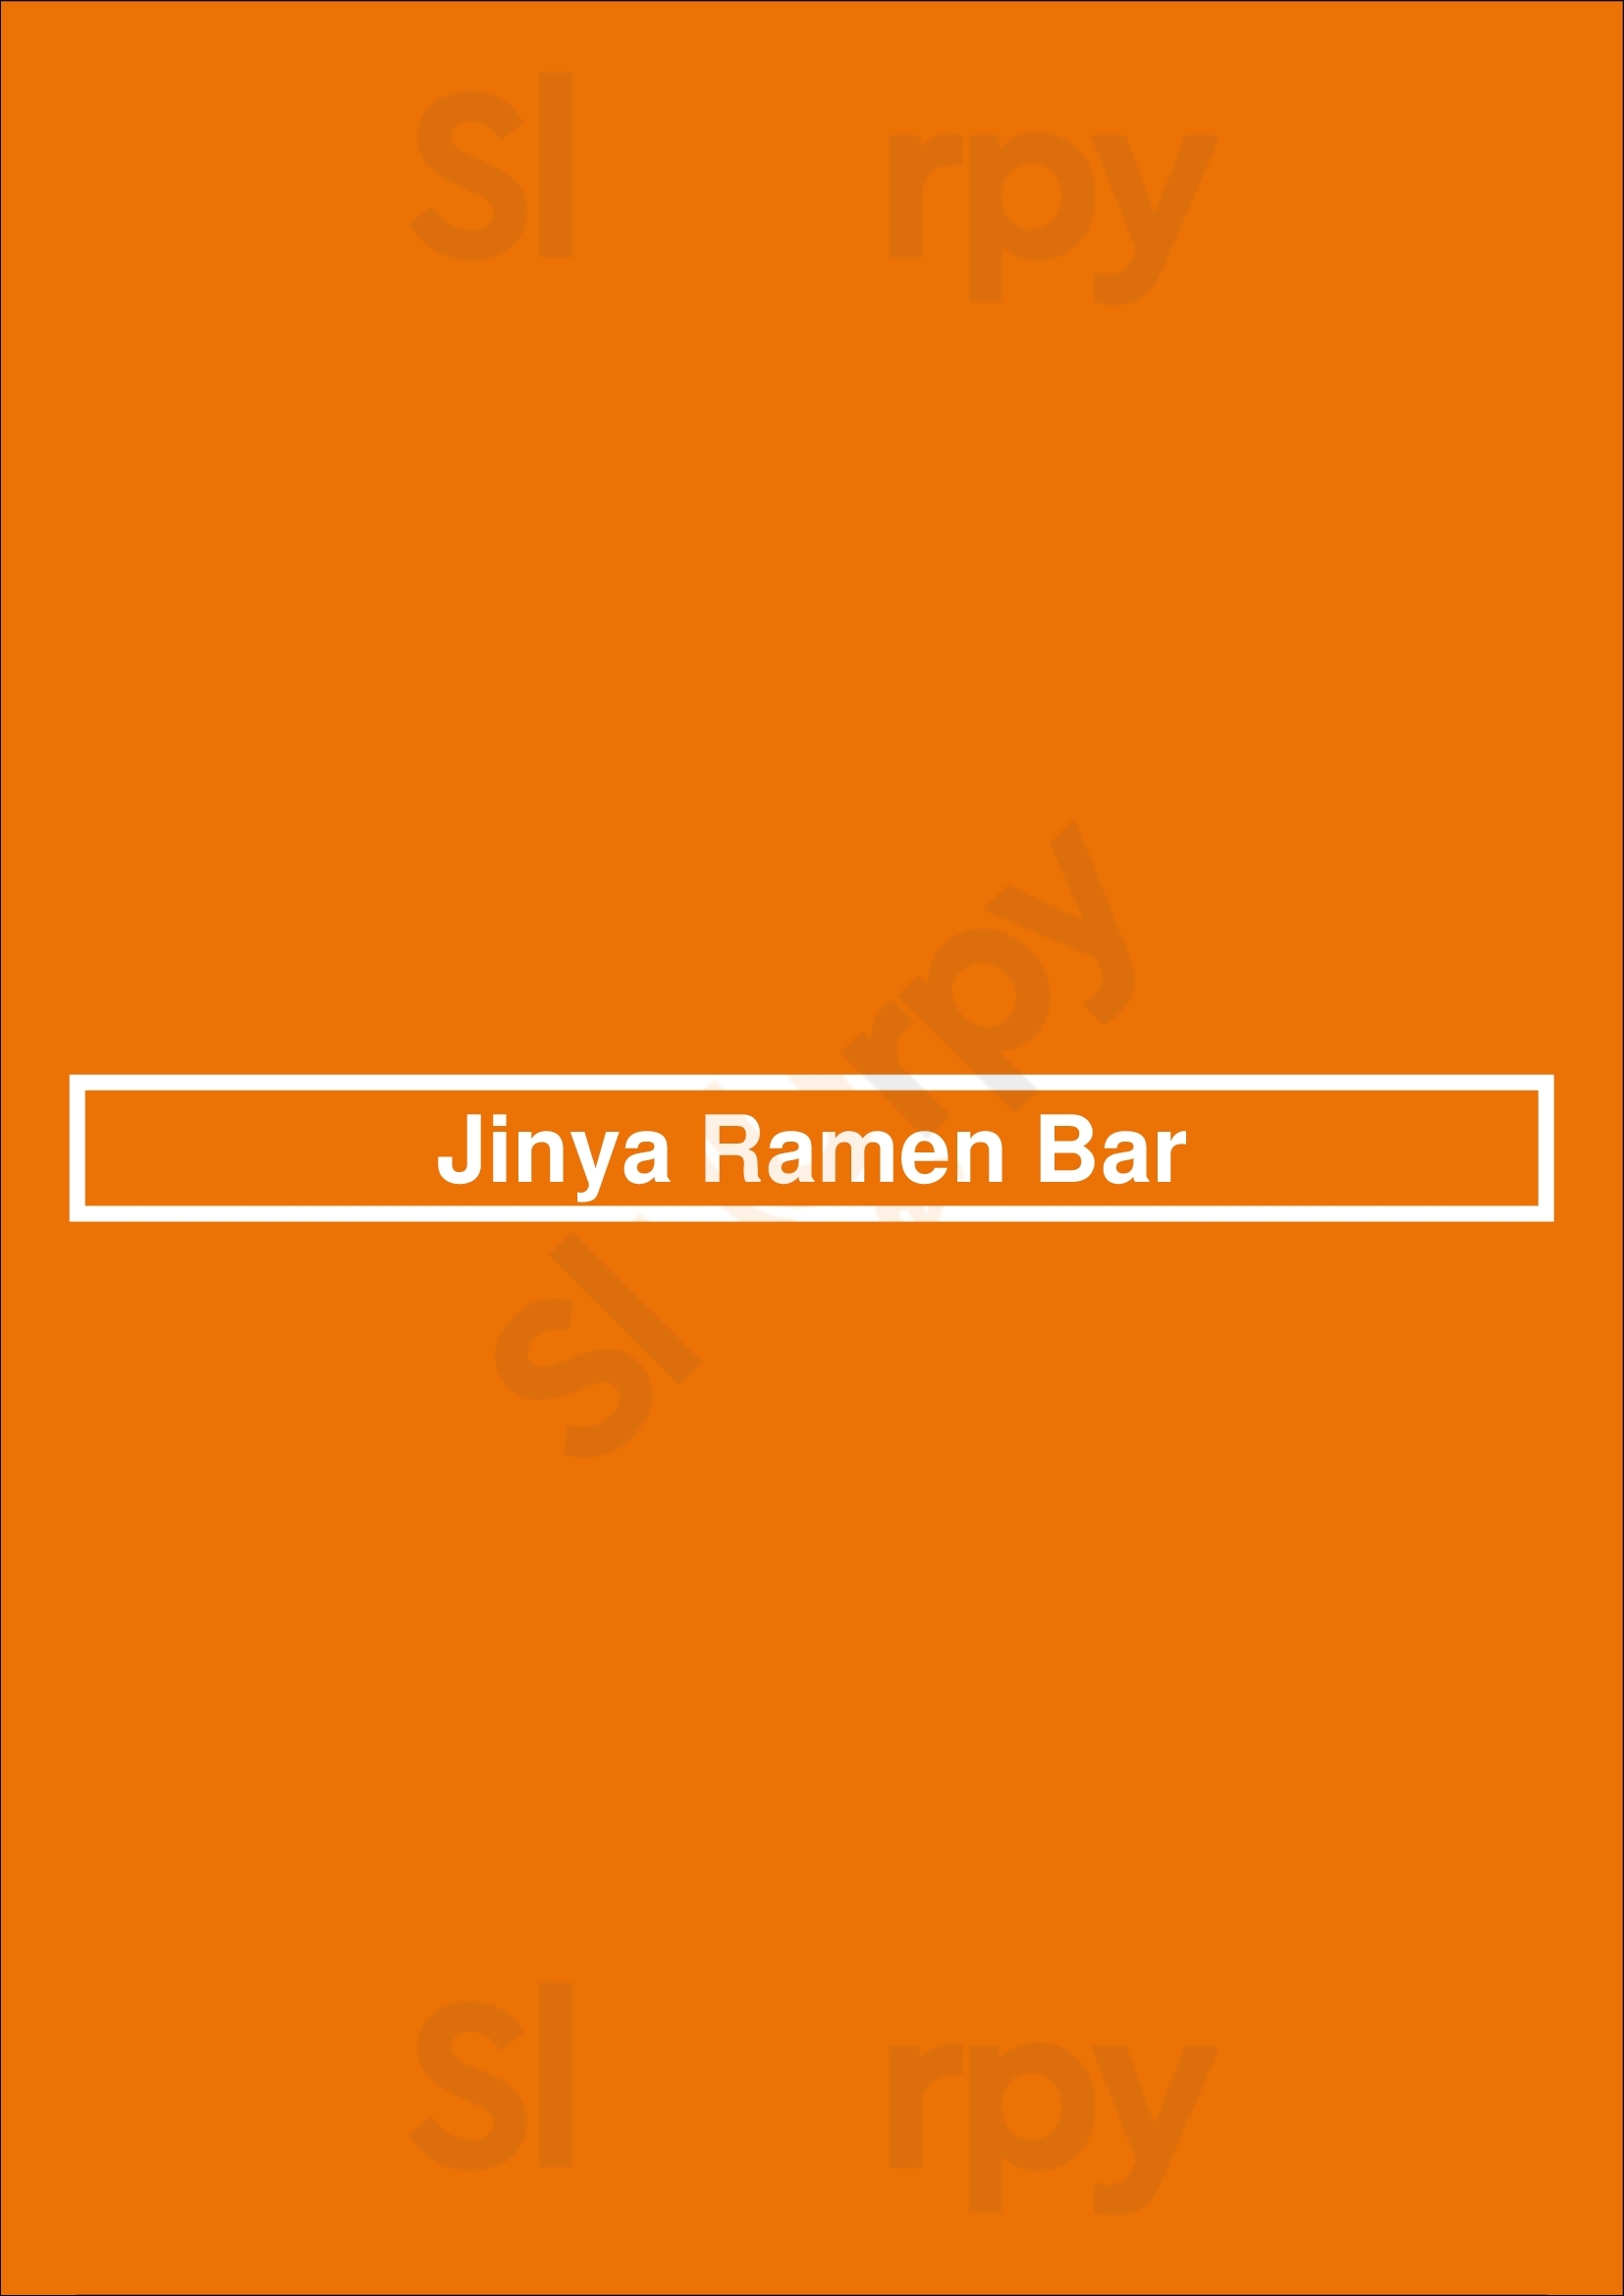 Jinya Ramen Bar - Midtown Houston Menu - 1